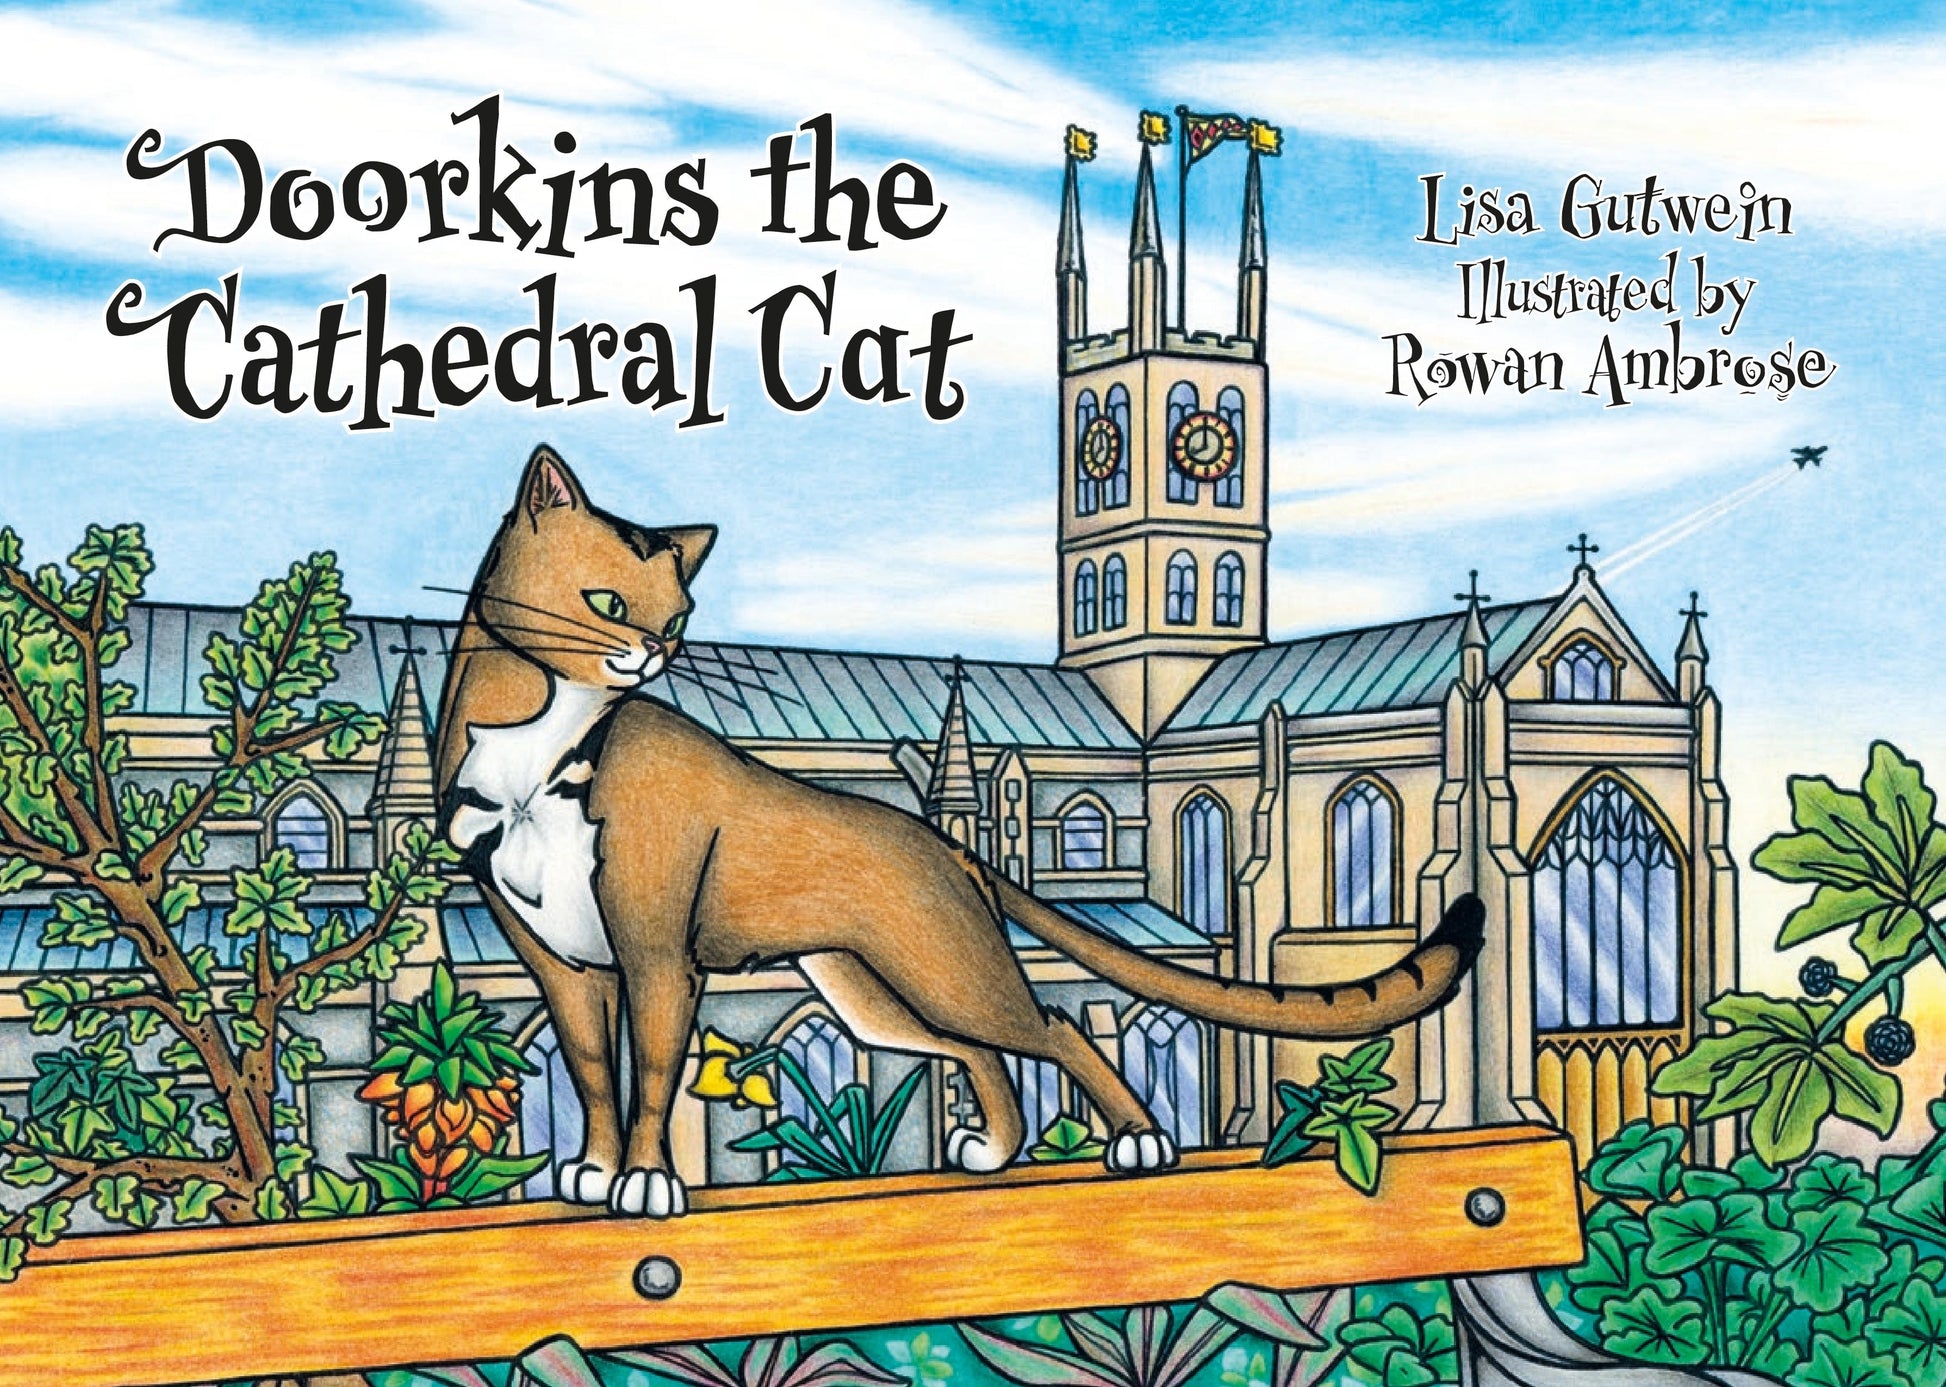 Doorkins the Cathedral Cat by Rowan Ambrose, Lisa Gutwein